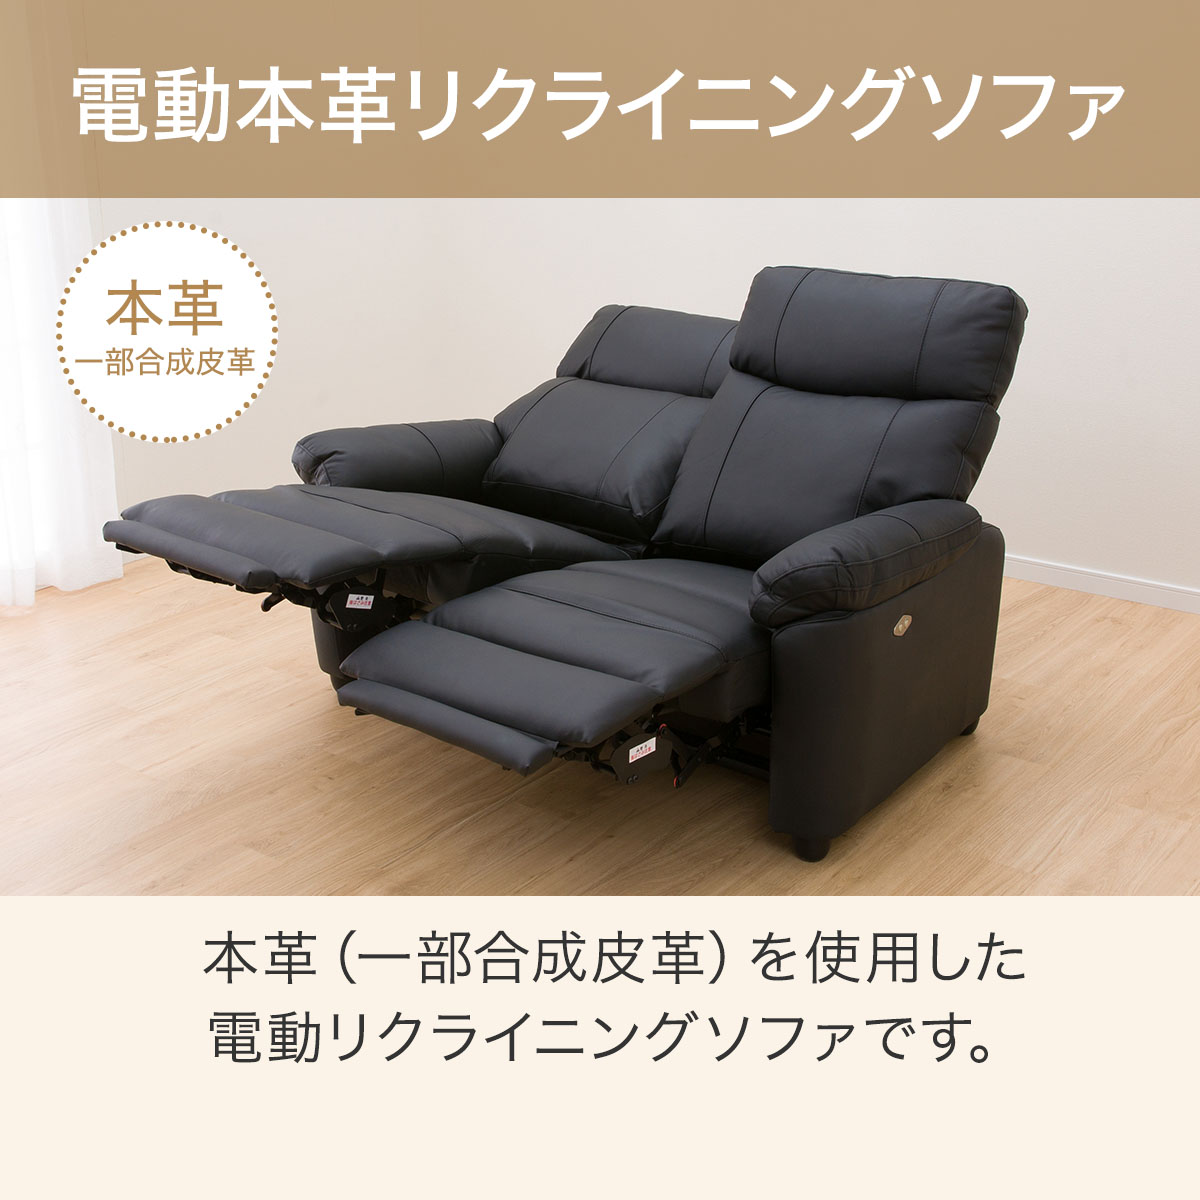 LURKEY社 本革ソファ 電動リクライニング - 北海道の家具